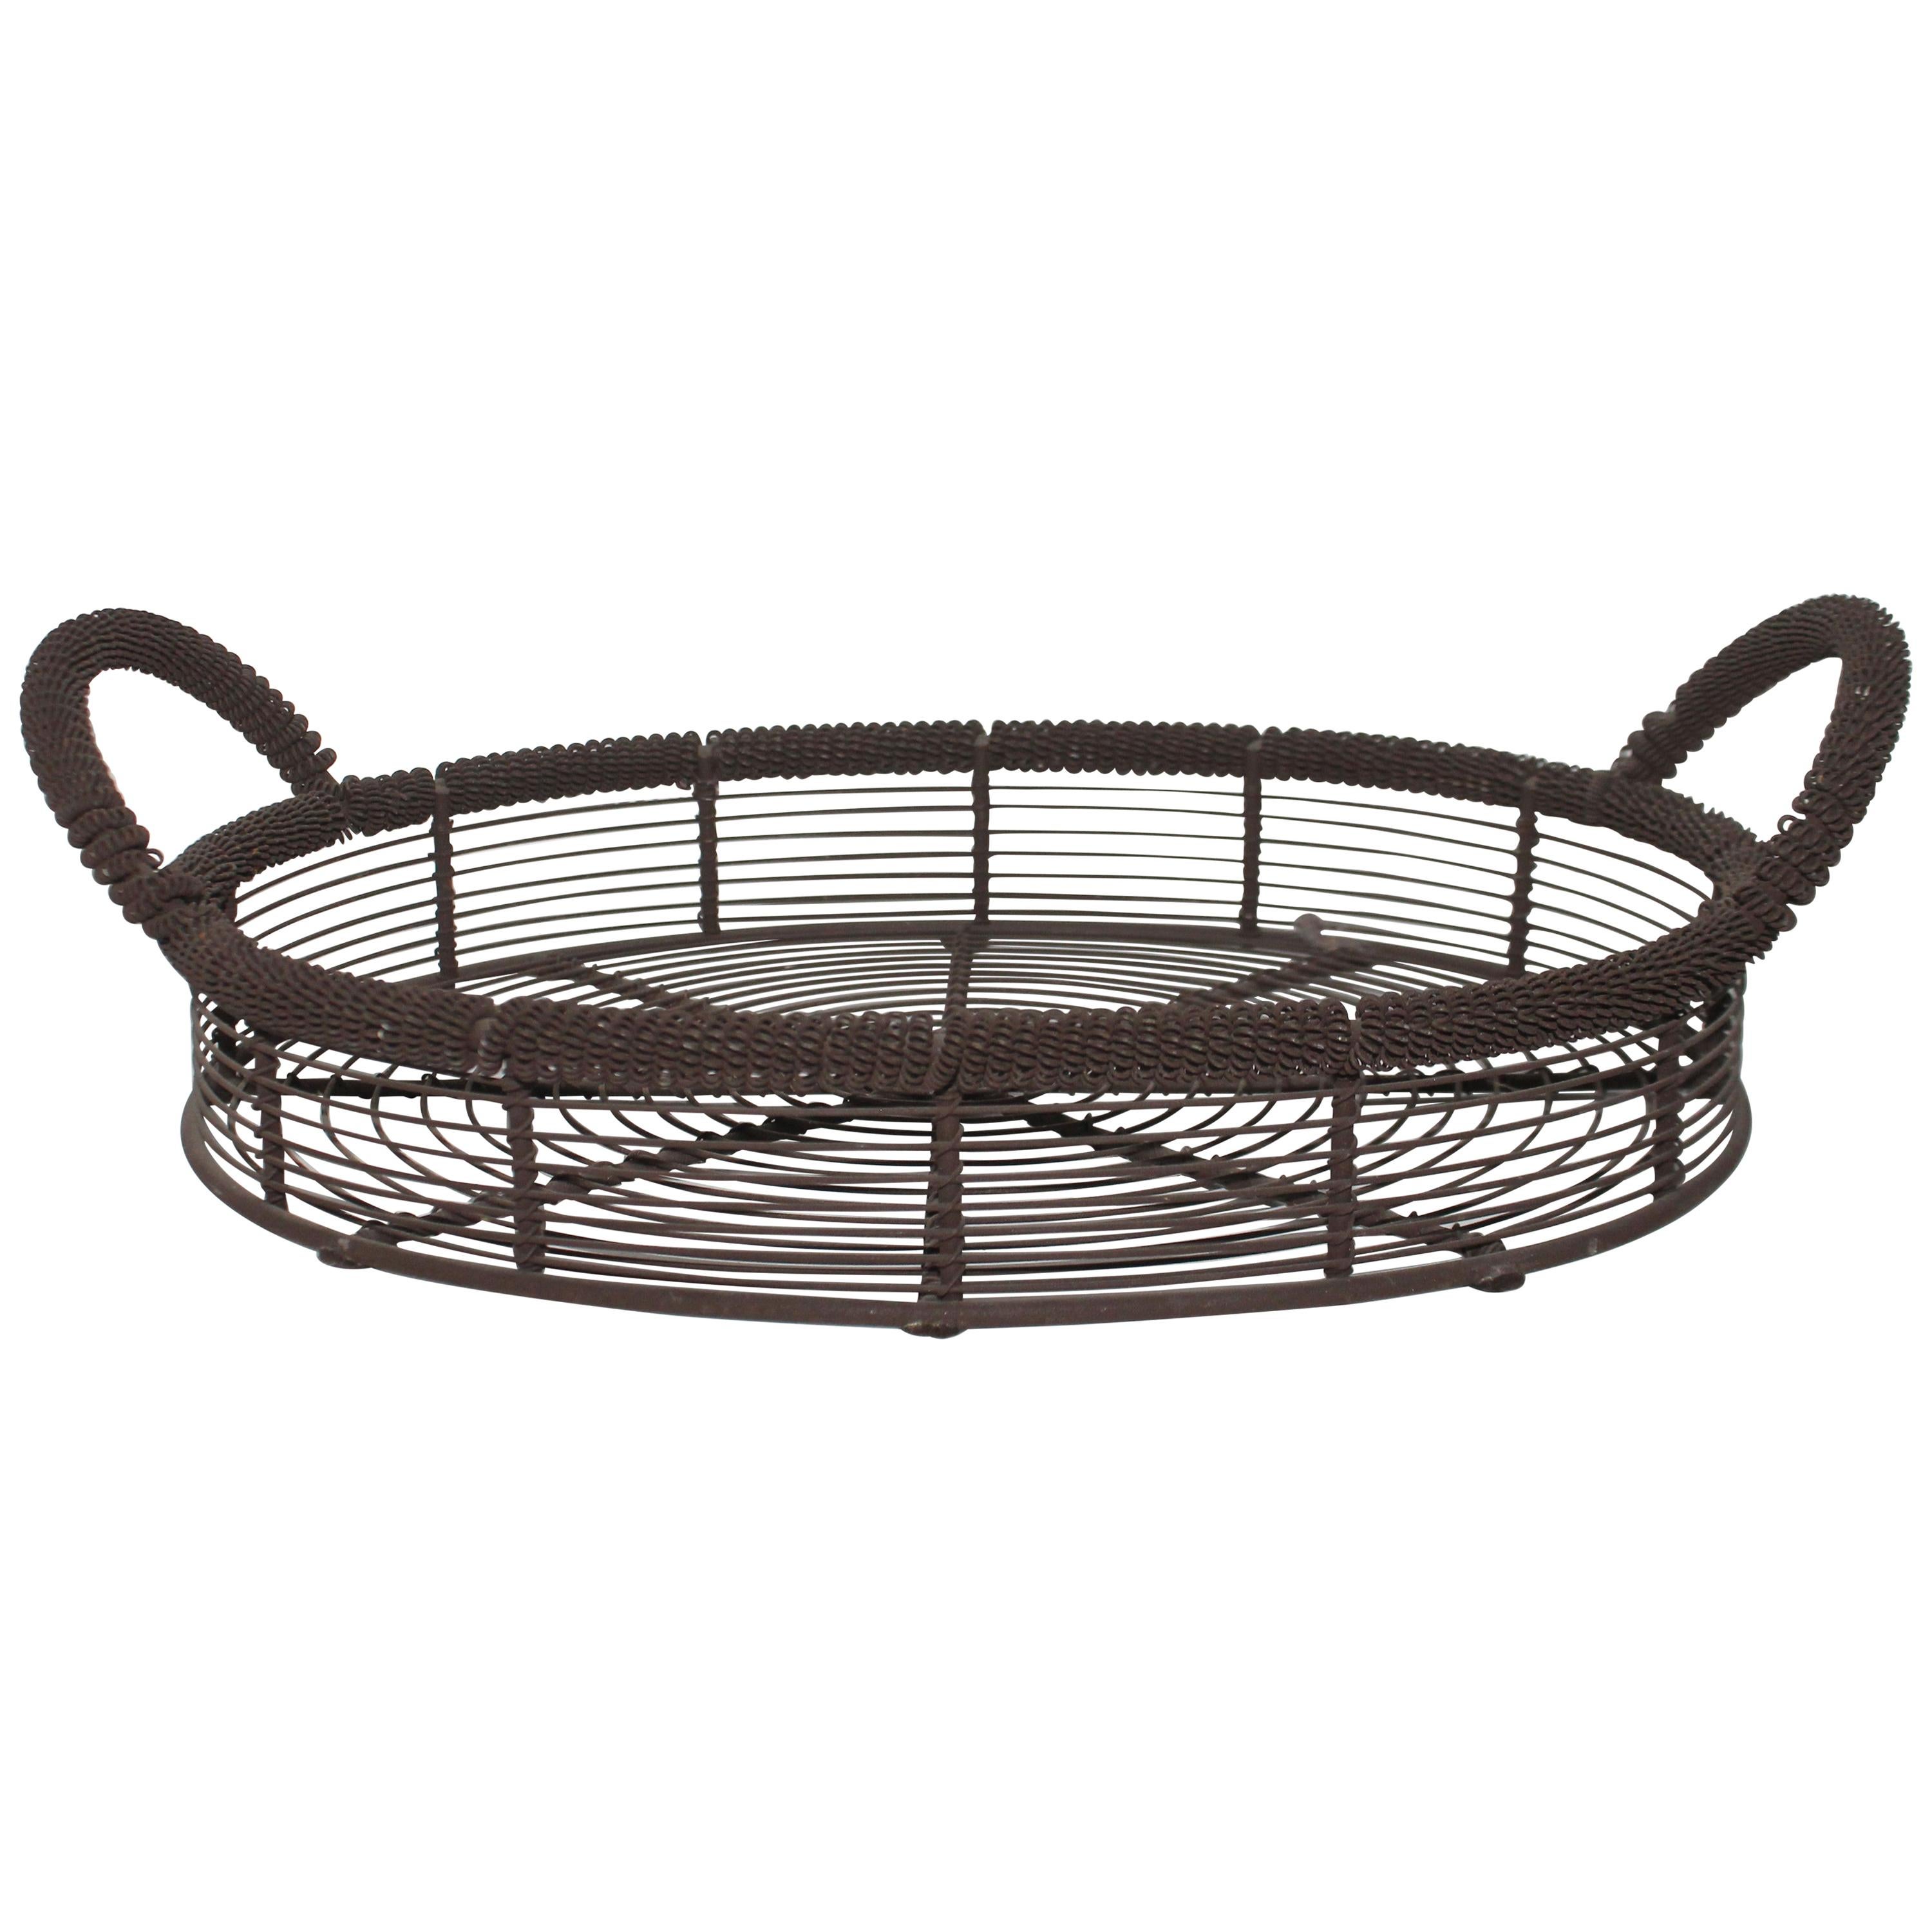 19th Century Handmade Wire Handled Basket